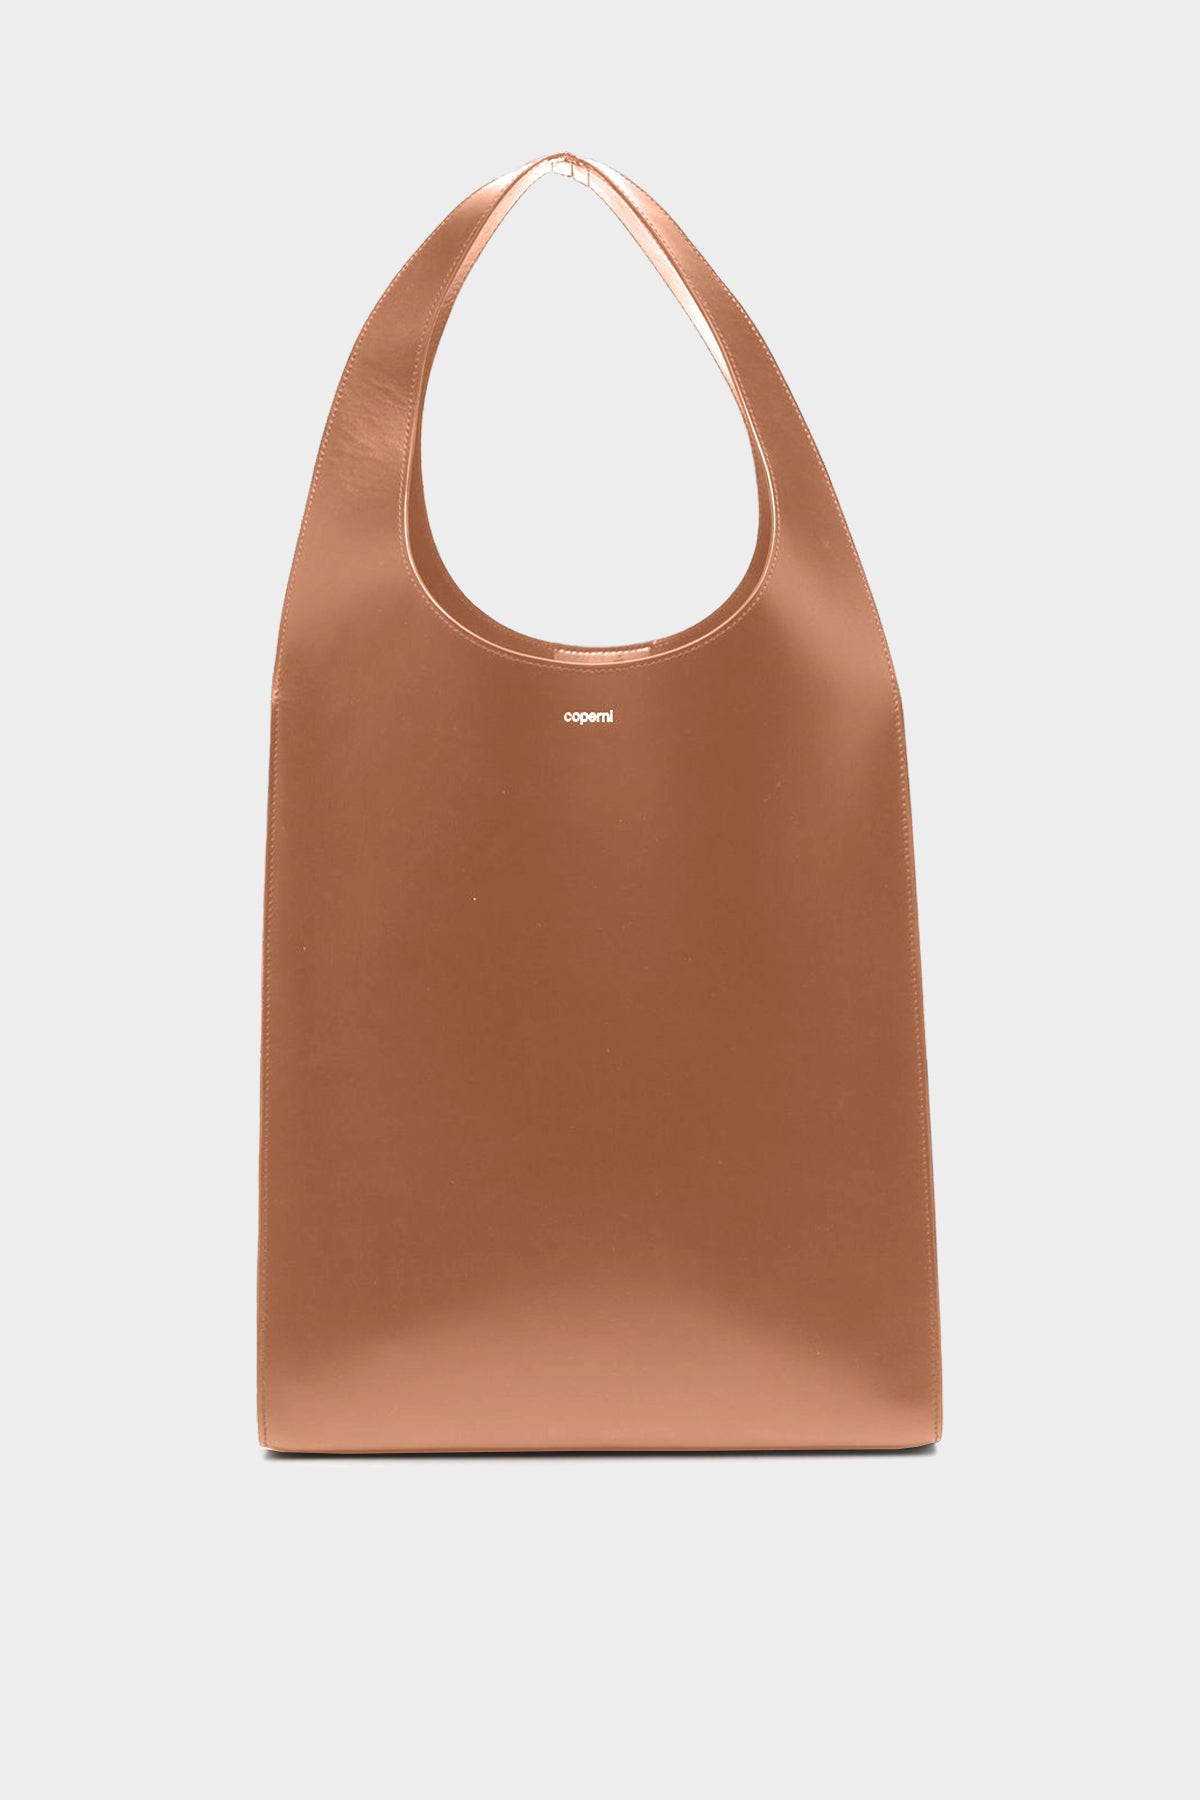 Swipe Tote Bag in Camel - shop-olivia.com